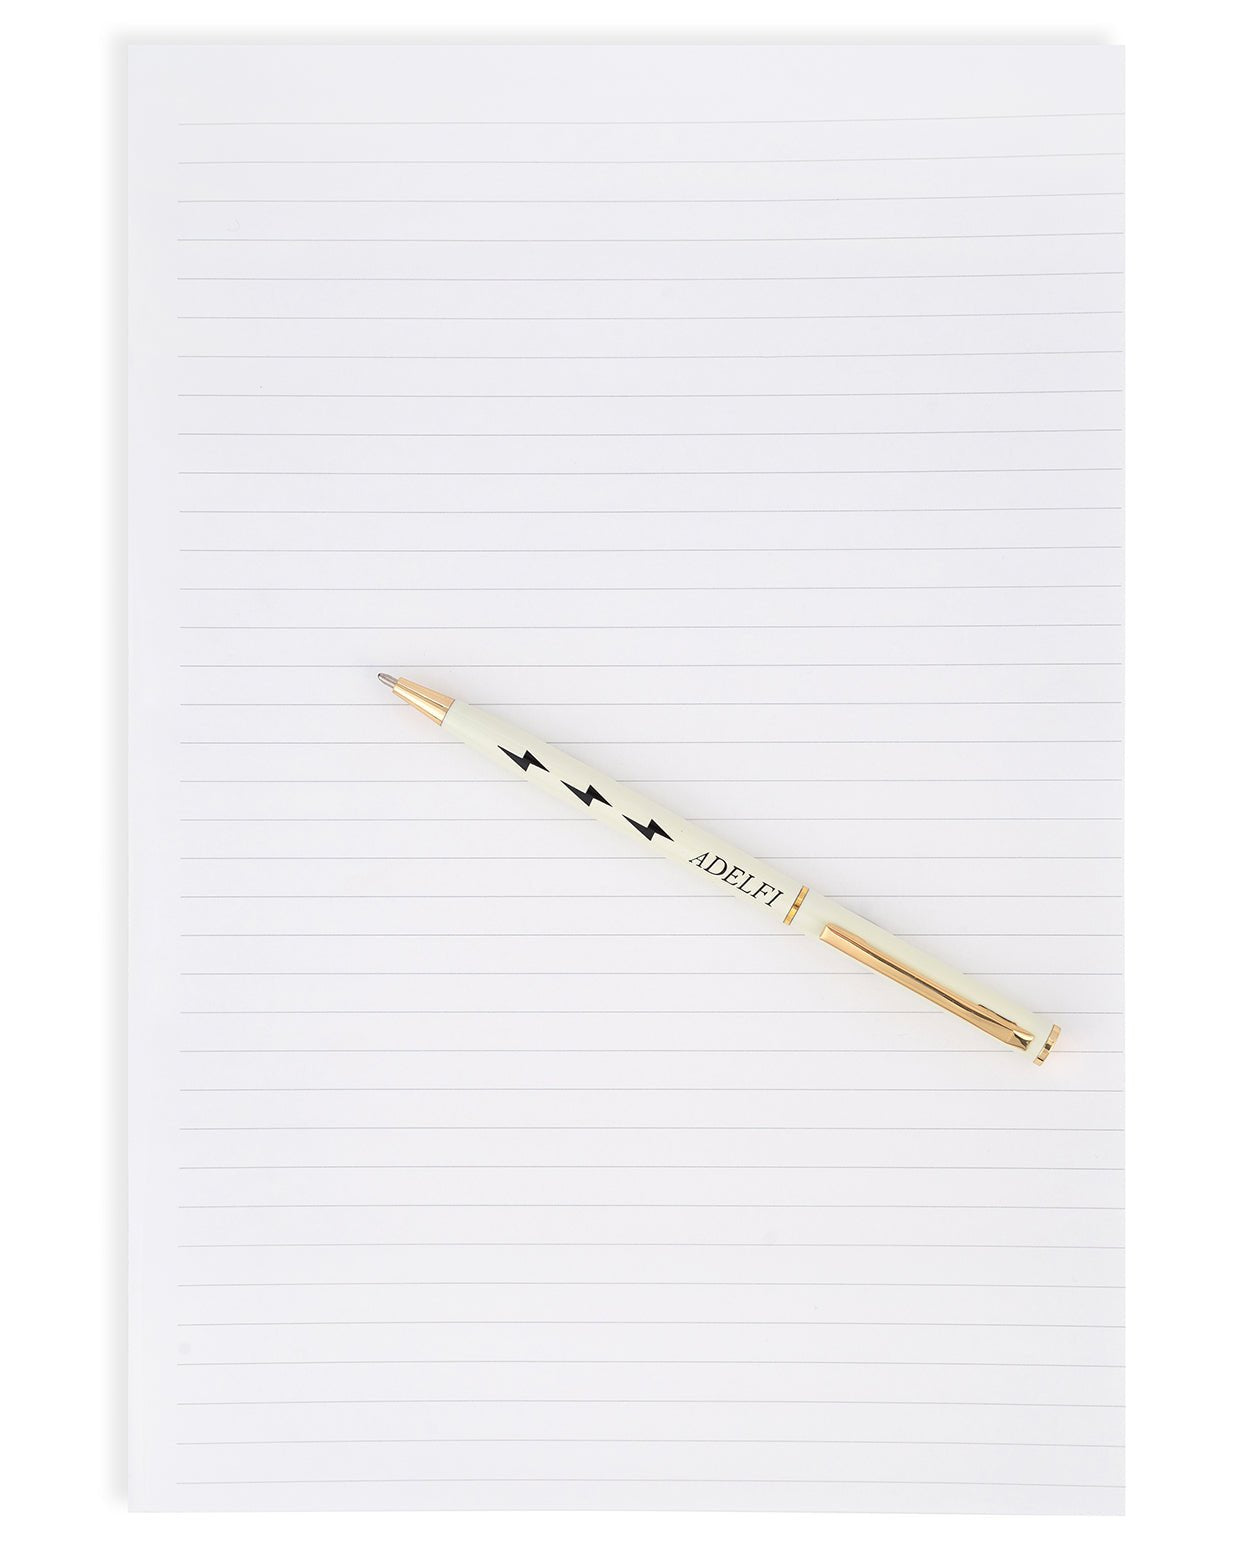 Adelfi pen on white lined sheets.